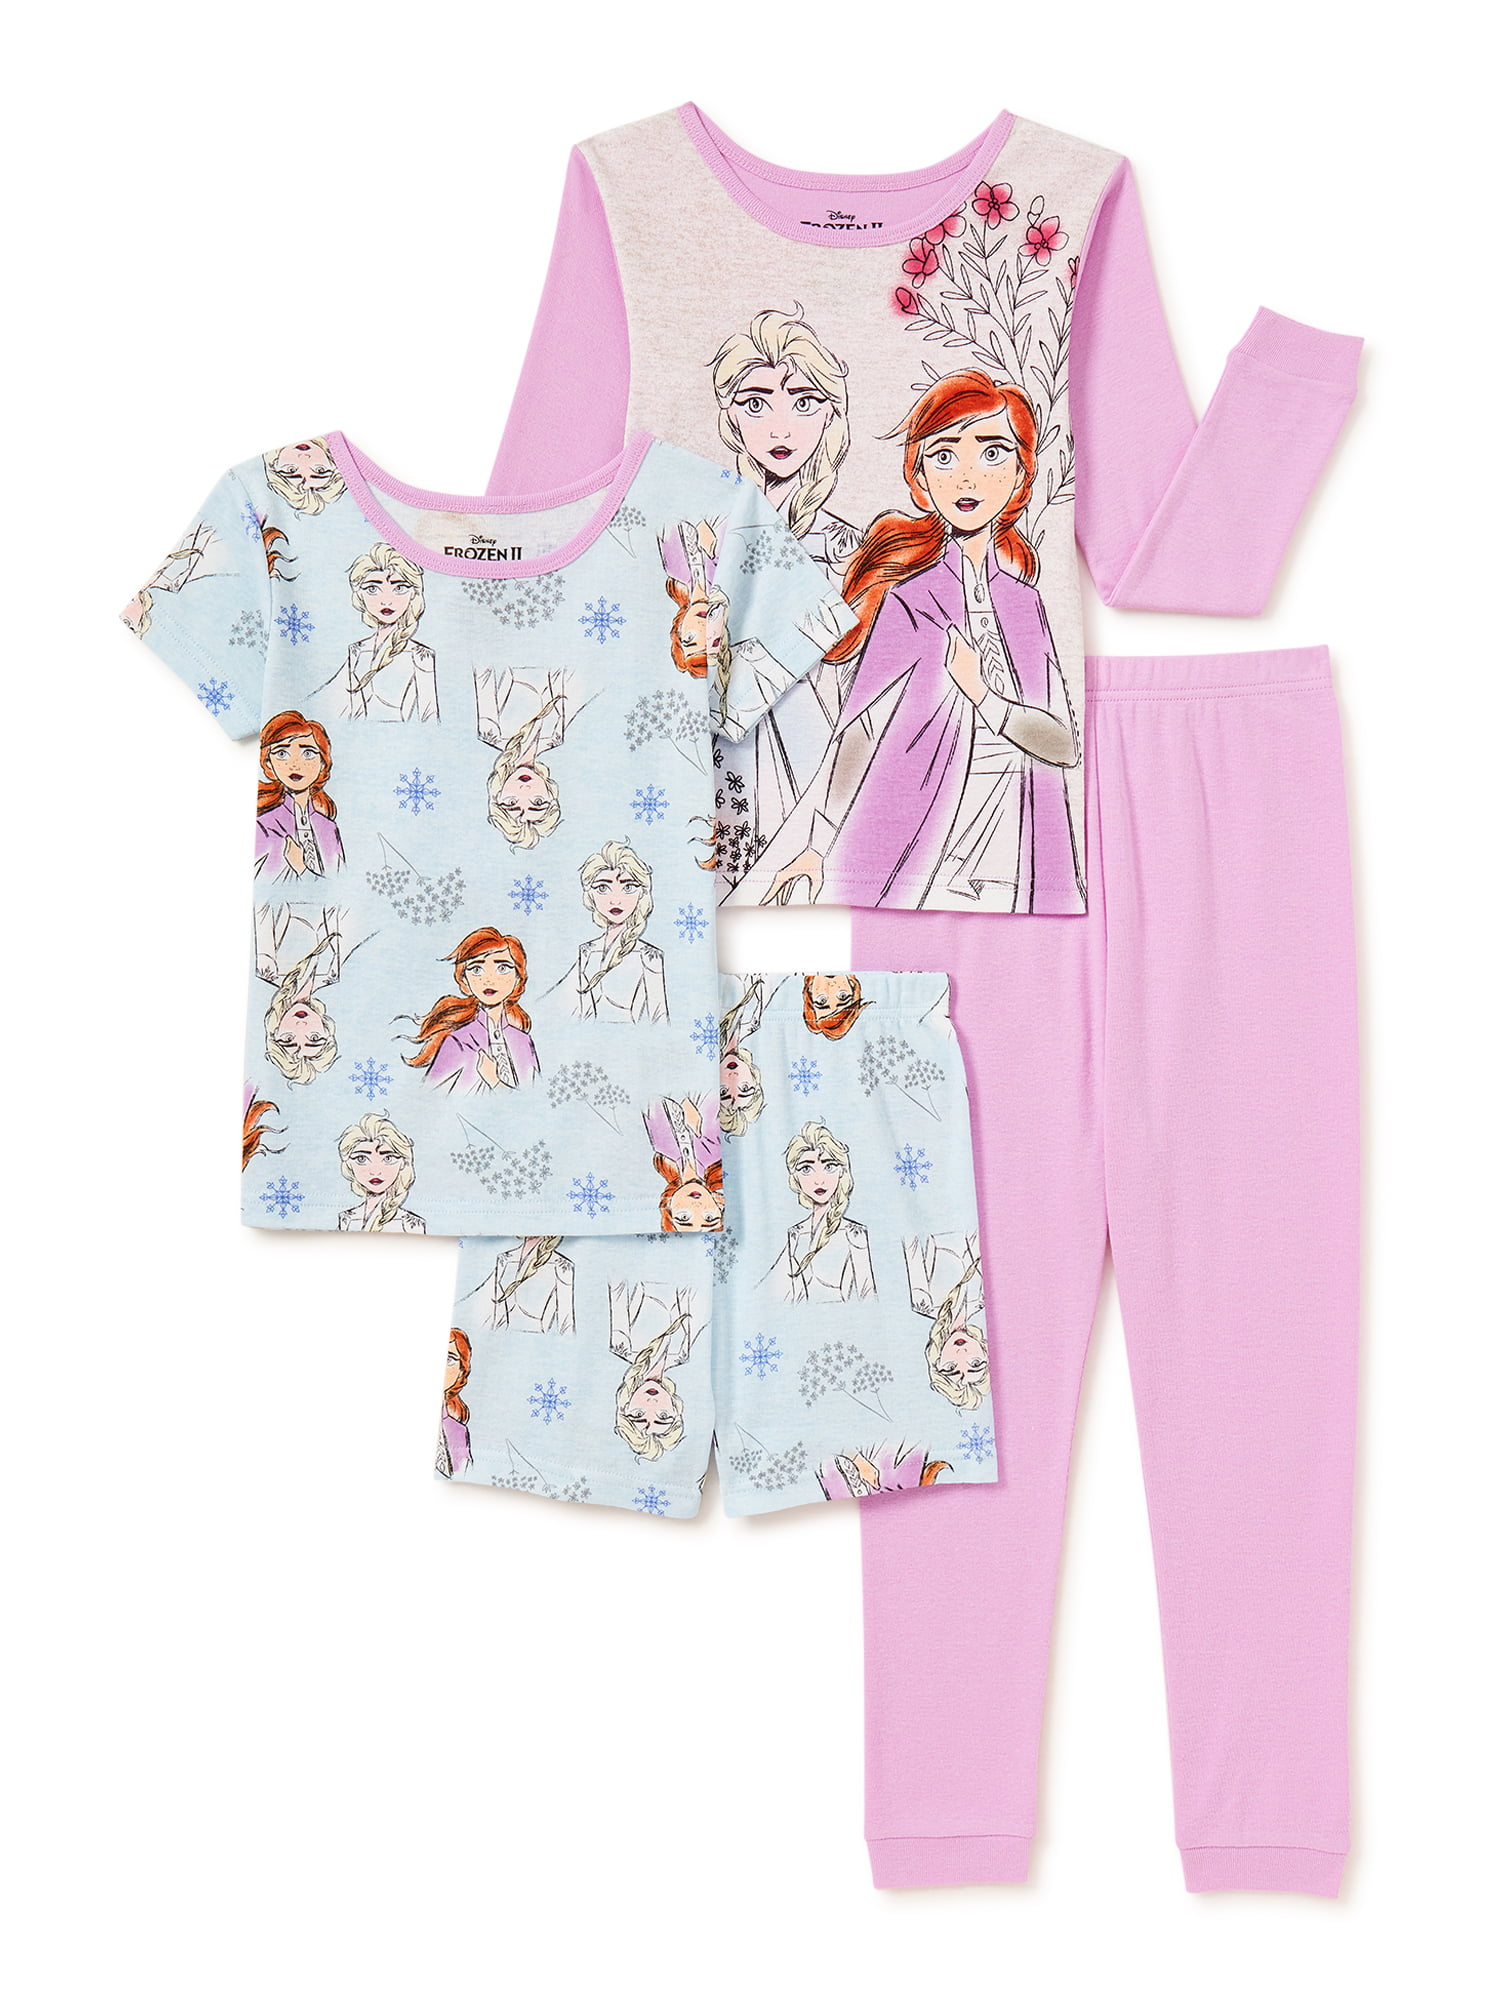 4-Piece Disney Frozen 2 Girls' Pajama Sleep Set (Sizes 4, 6, 8, 10) from $11.80 ($2.95 each) + Free Shipping w/ Walmart+ or on $35+